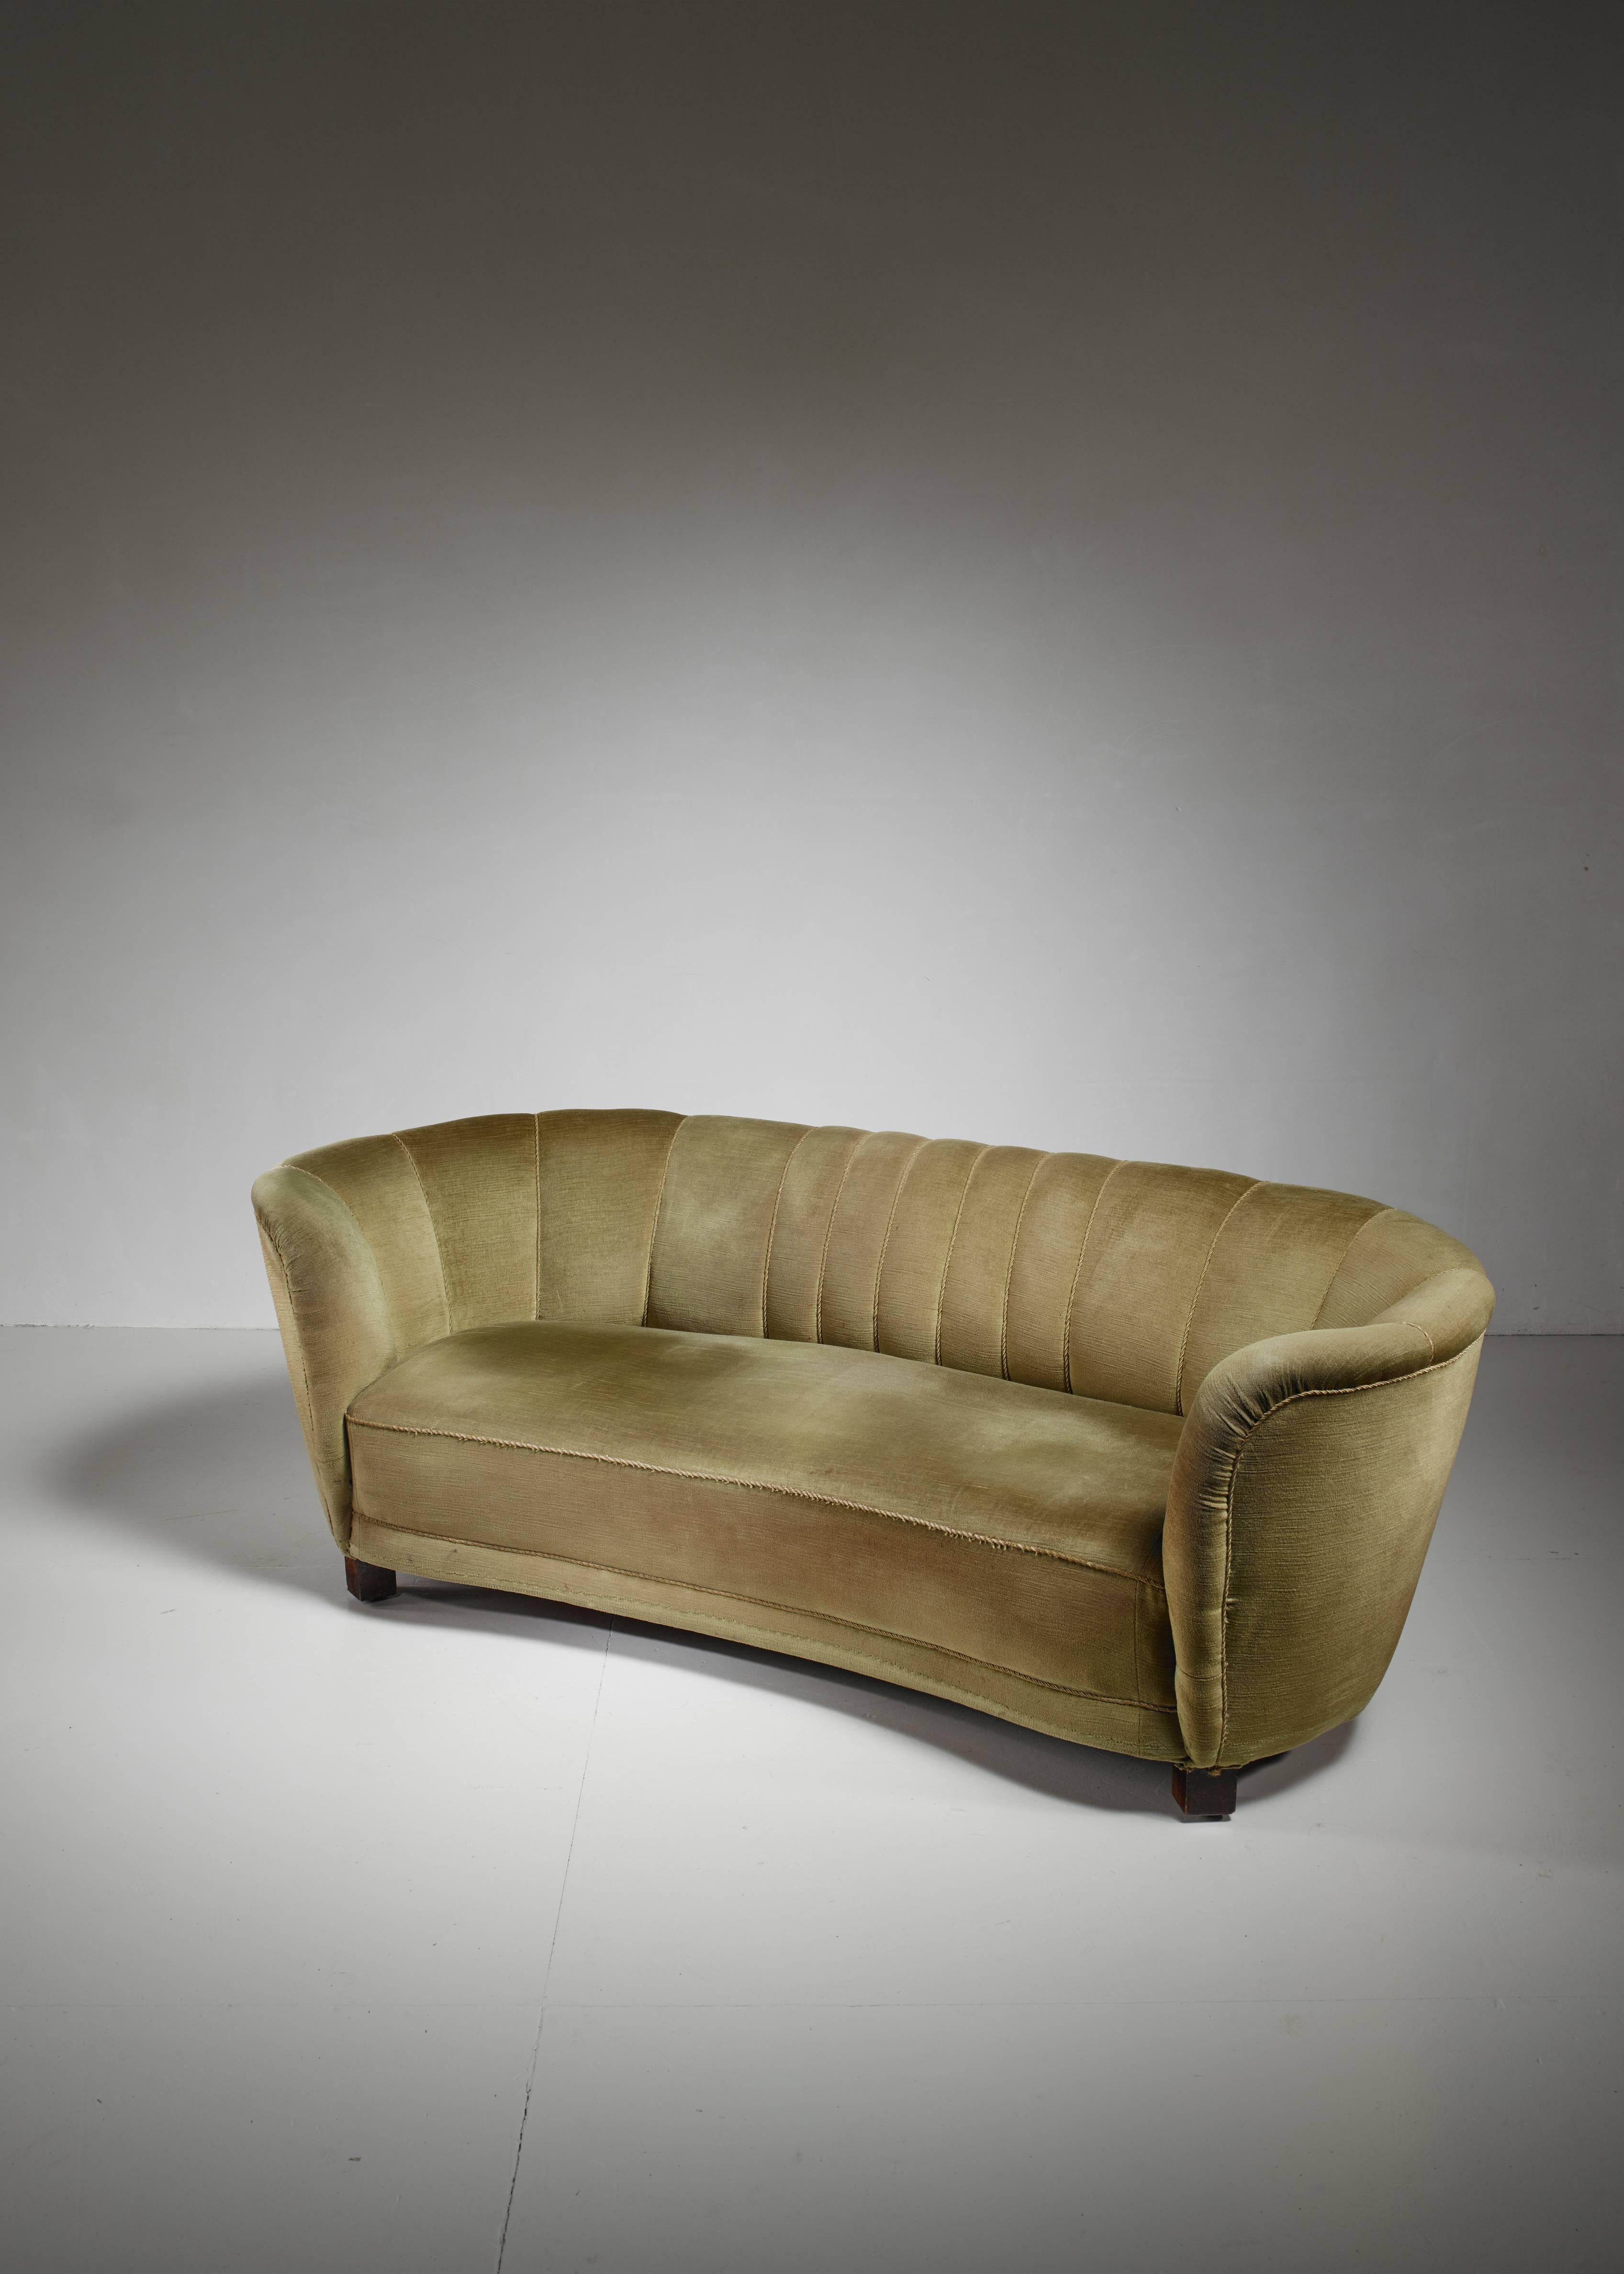 Scandinavian Modern Three-Seat Sofa with Green Velour Upholstery, Denmark, 1940s For Sale